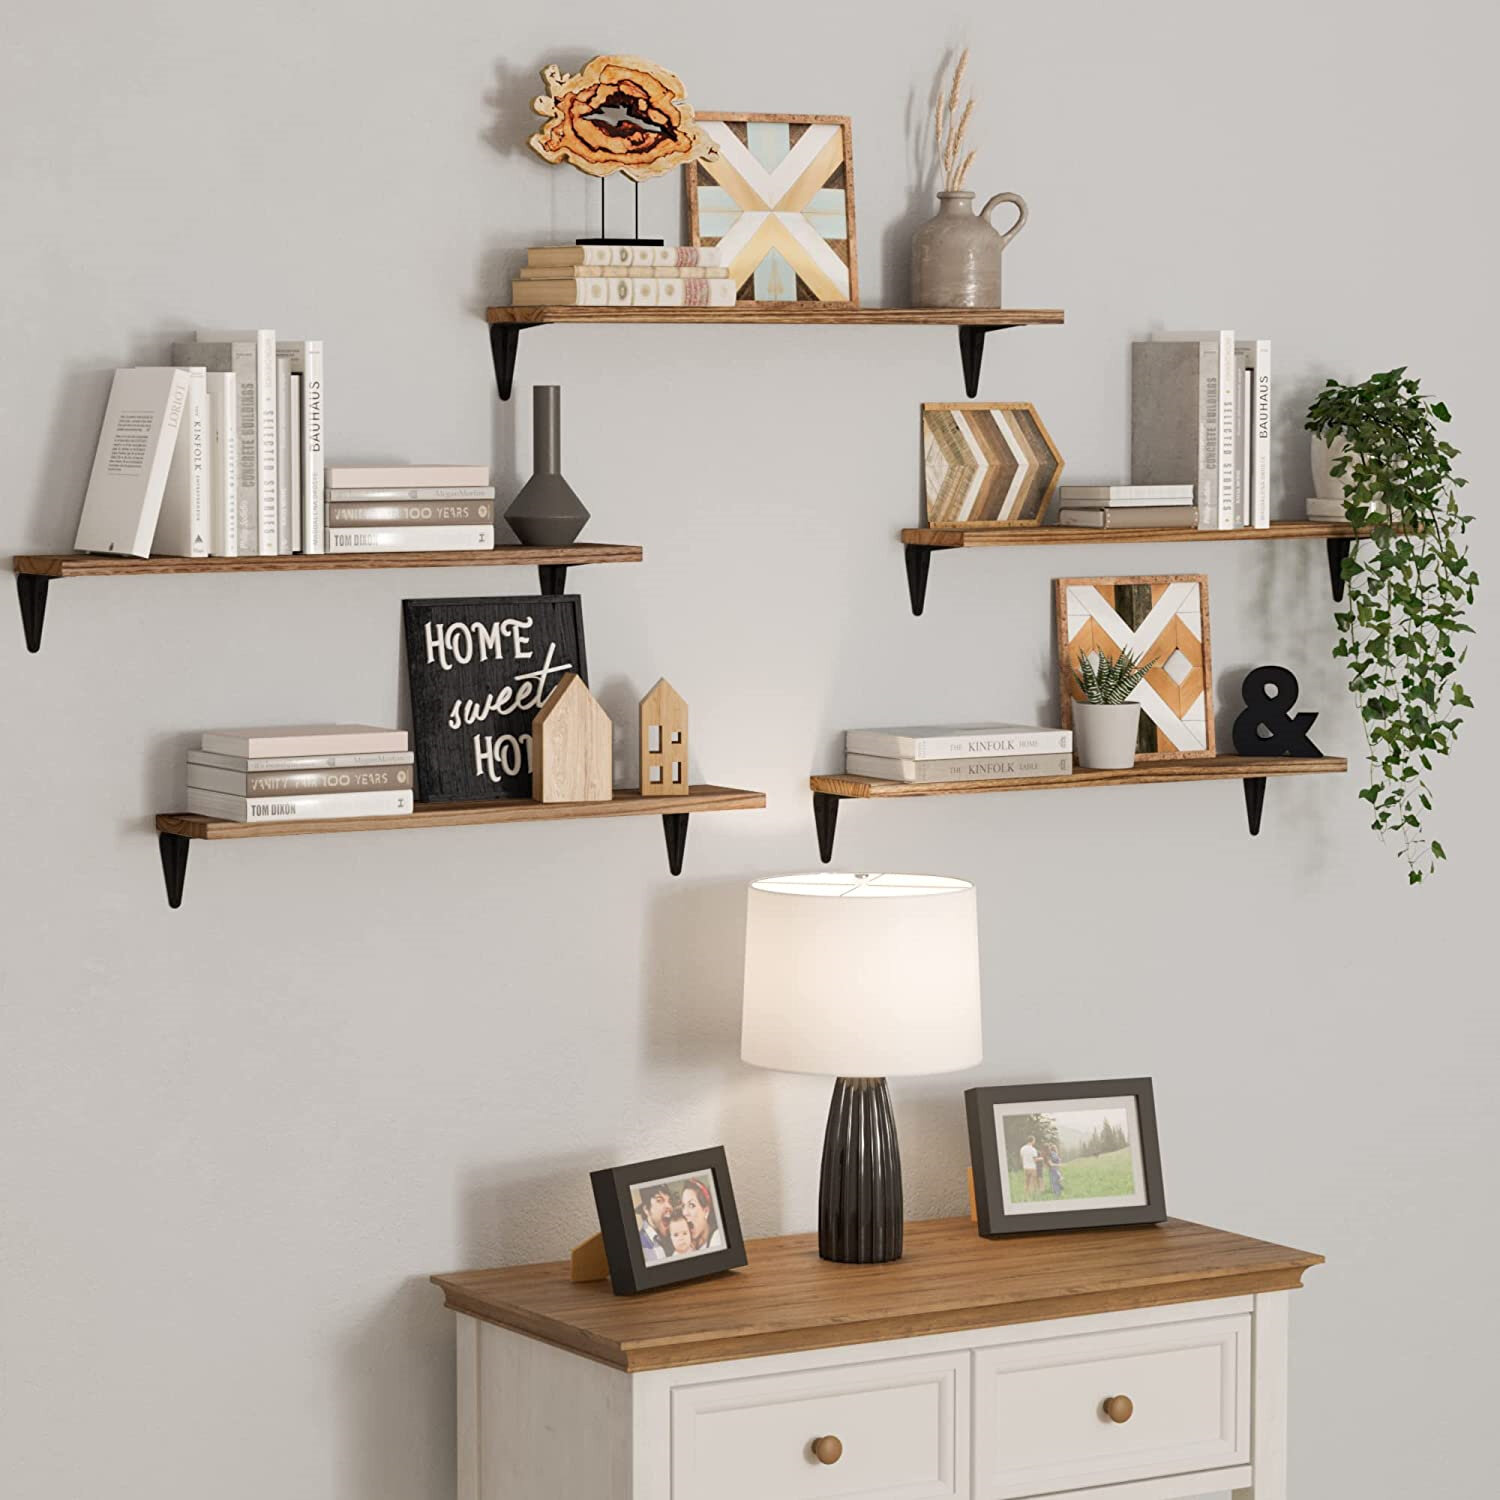 3 Pcs Floating Wall Shelf Mounted Display Shelves Bookshelf Storage Home Office 